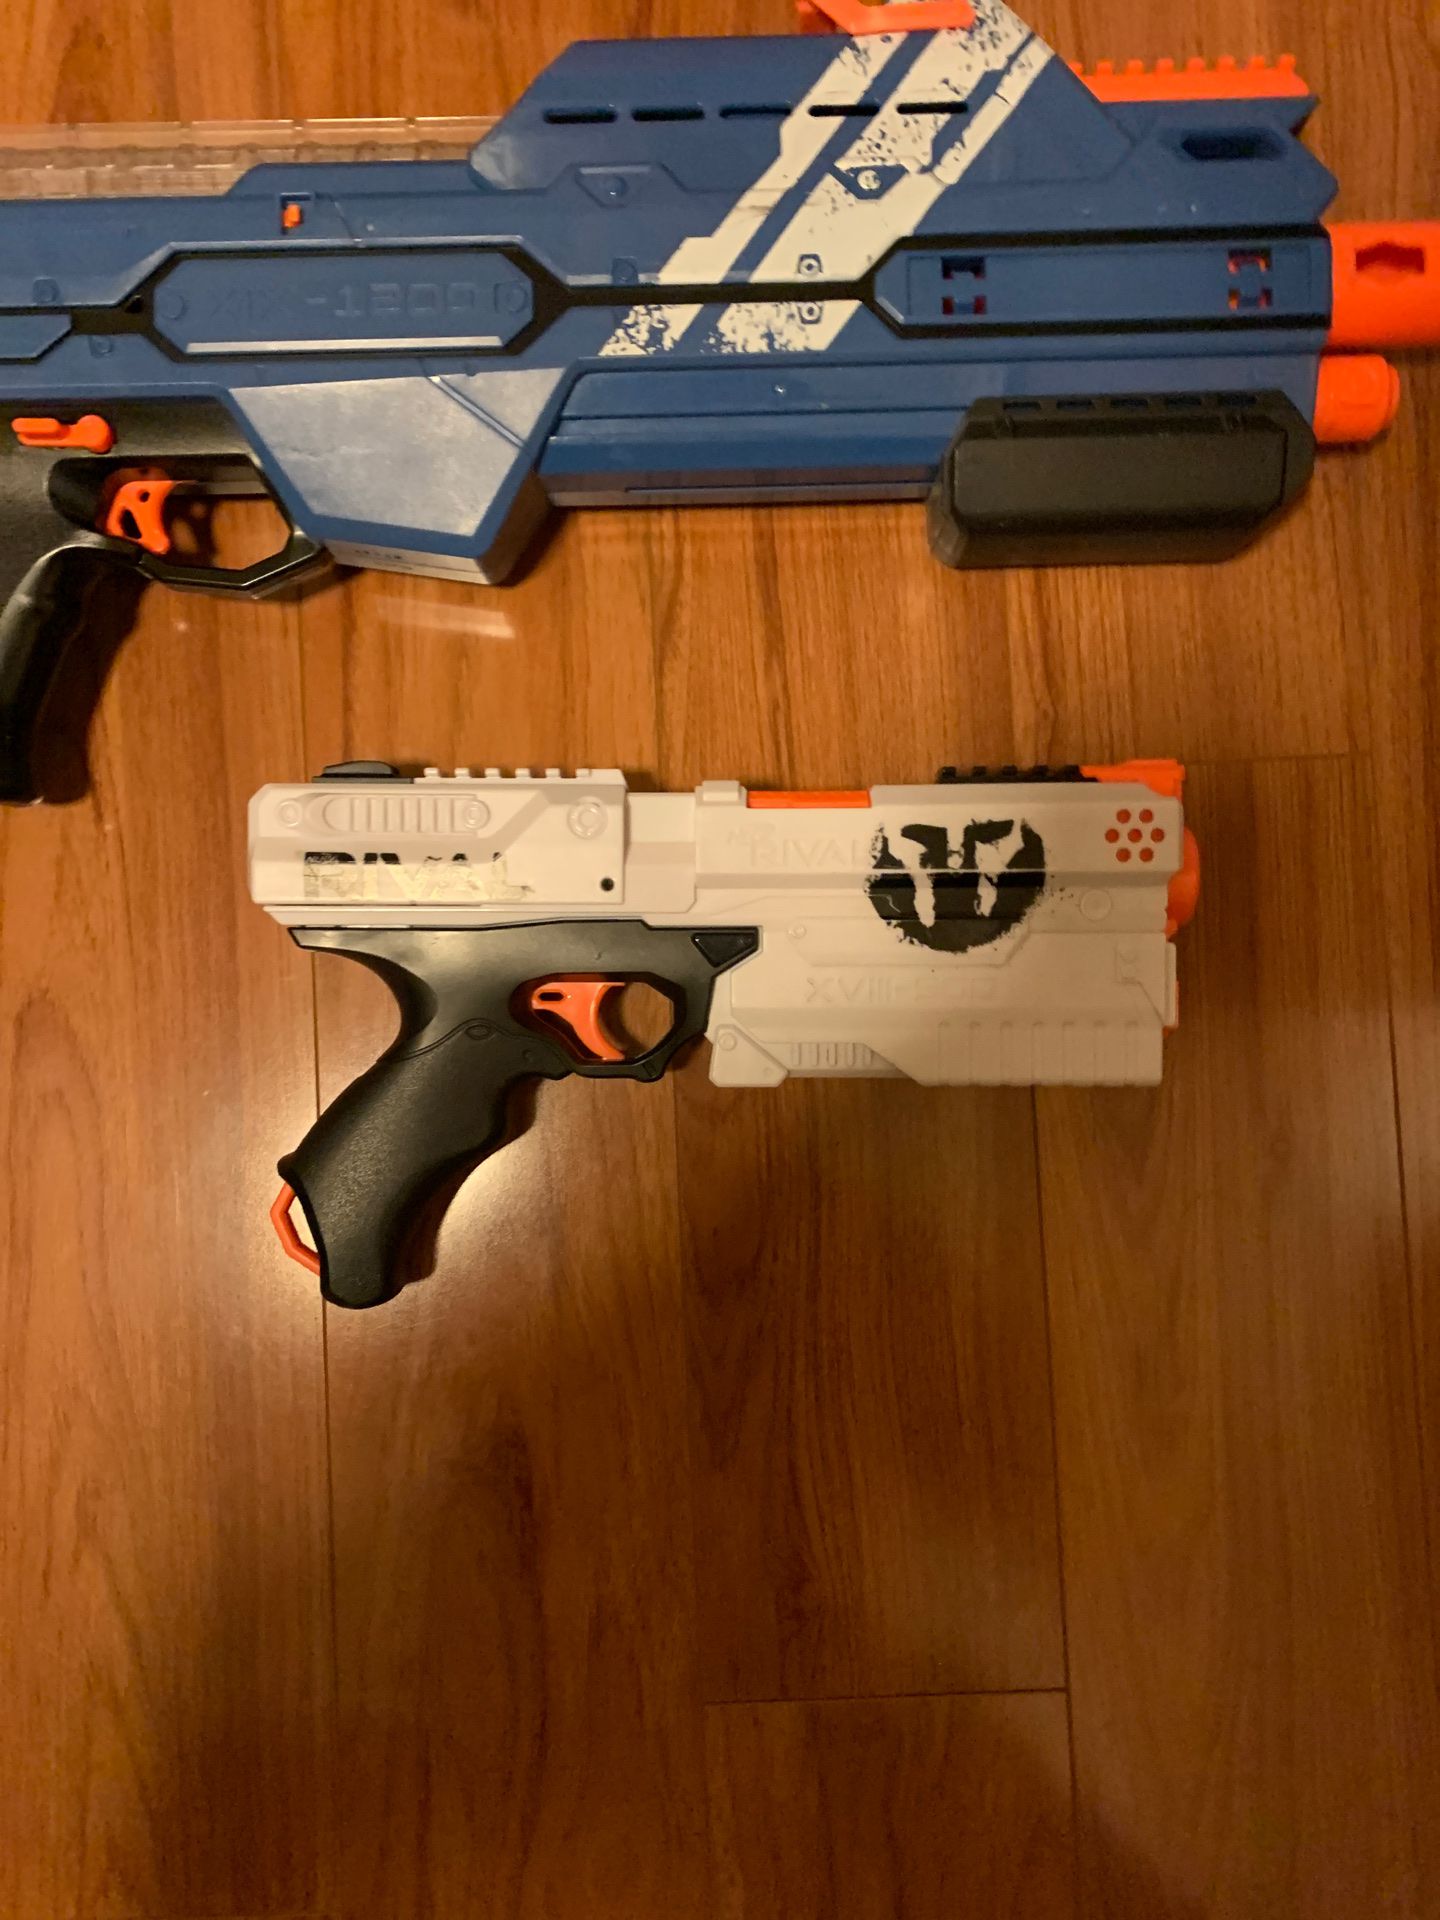 Nerf Guns (Rival Nerf Guns)